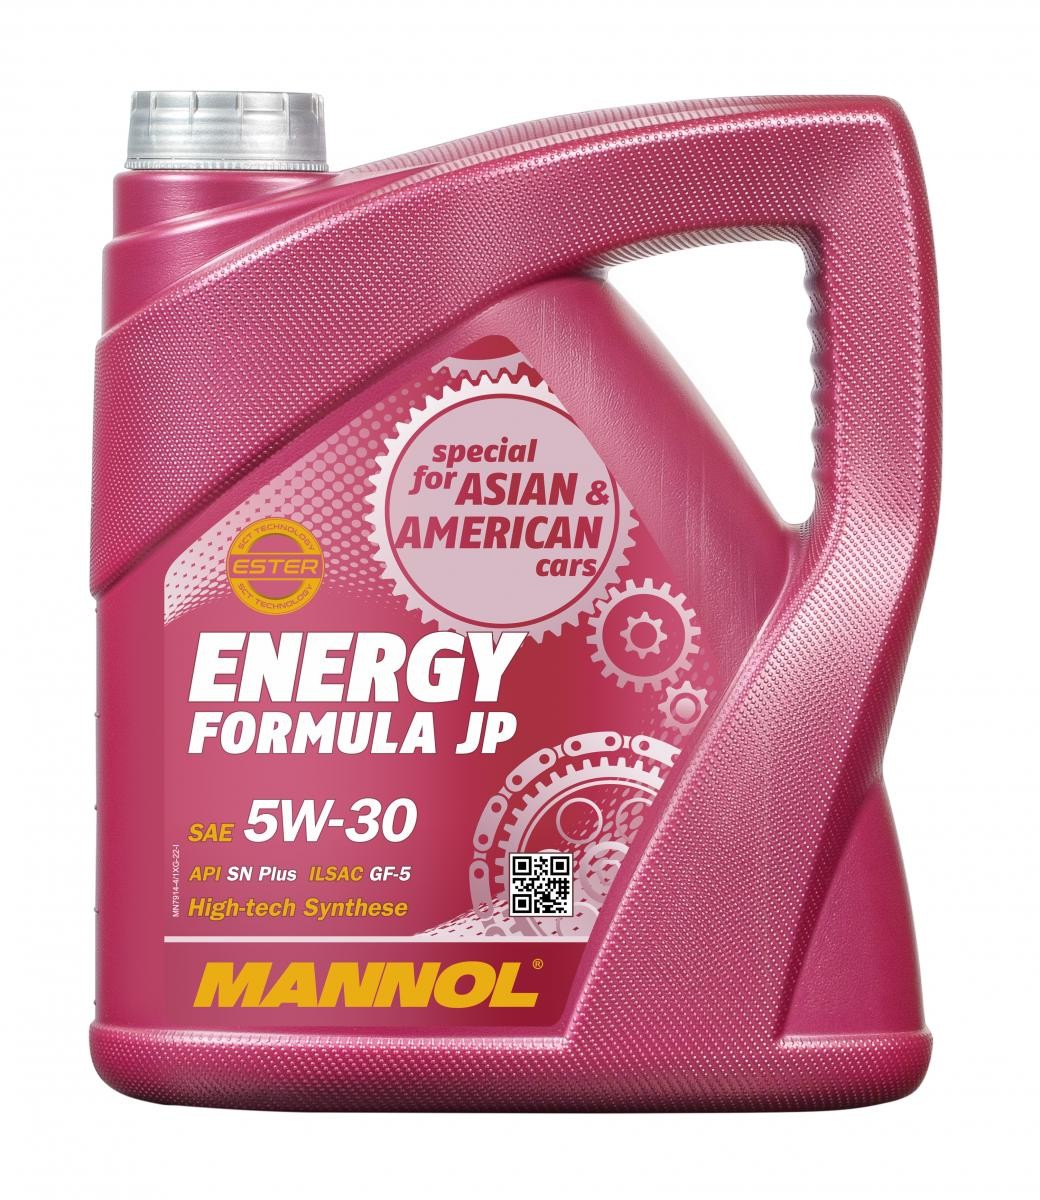 MANNOL ENERGY FORMULA JP MN7914-4 Engine oil 5W-30, 4l